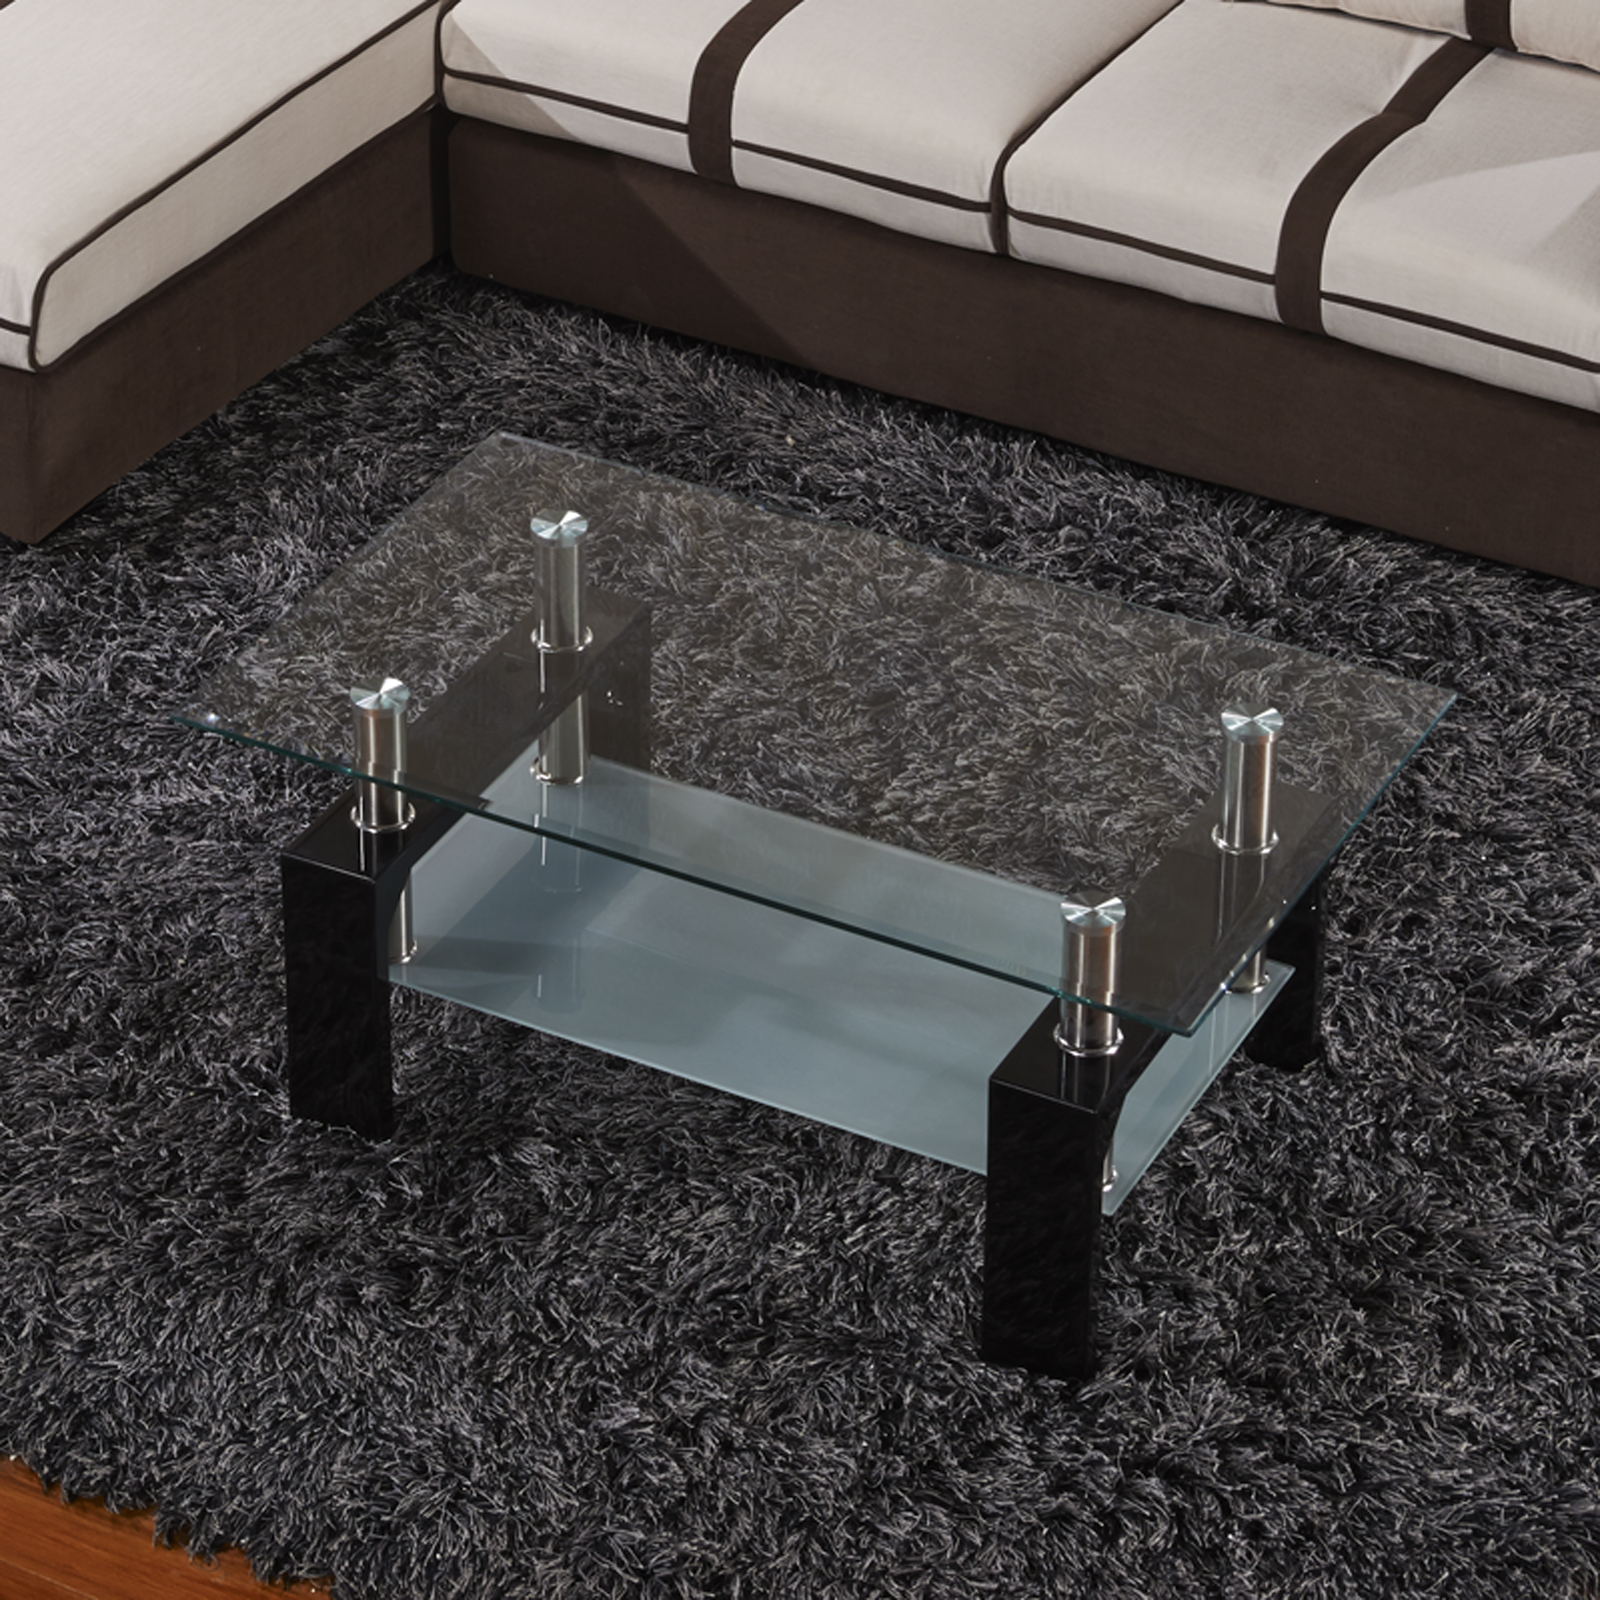 Uenjoy Rectangular Glass Coffee Table Shelf Chrome Black Wood Living Room Furniture, Black - image 4 of 8